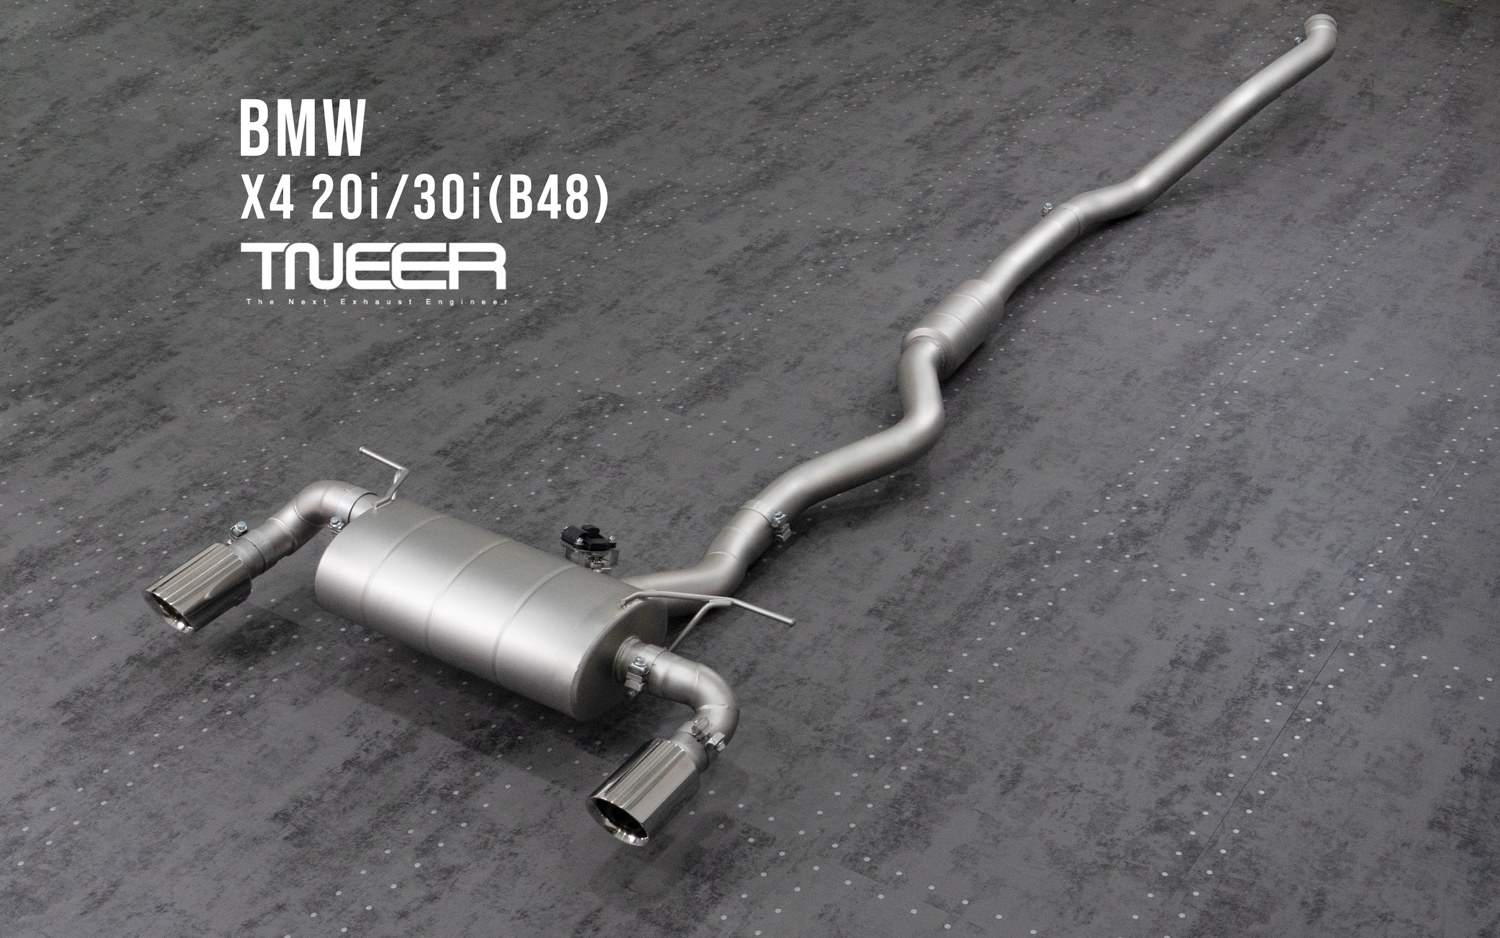 BMW i8 TNEER Performance Exhaust System